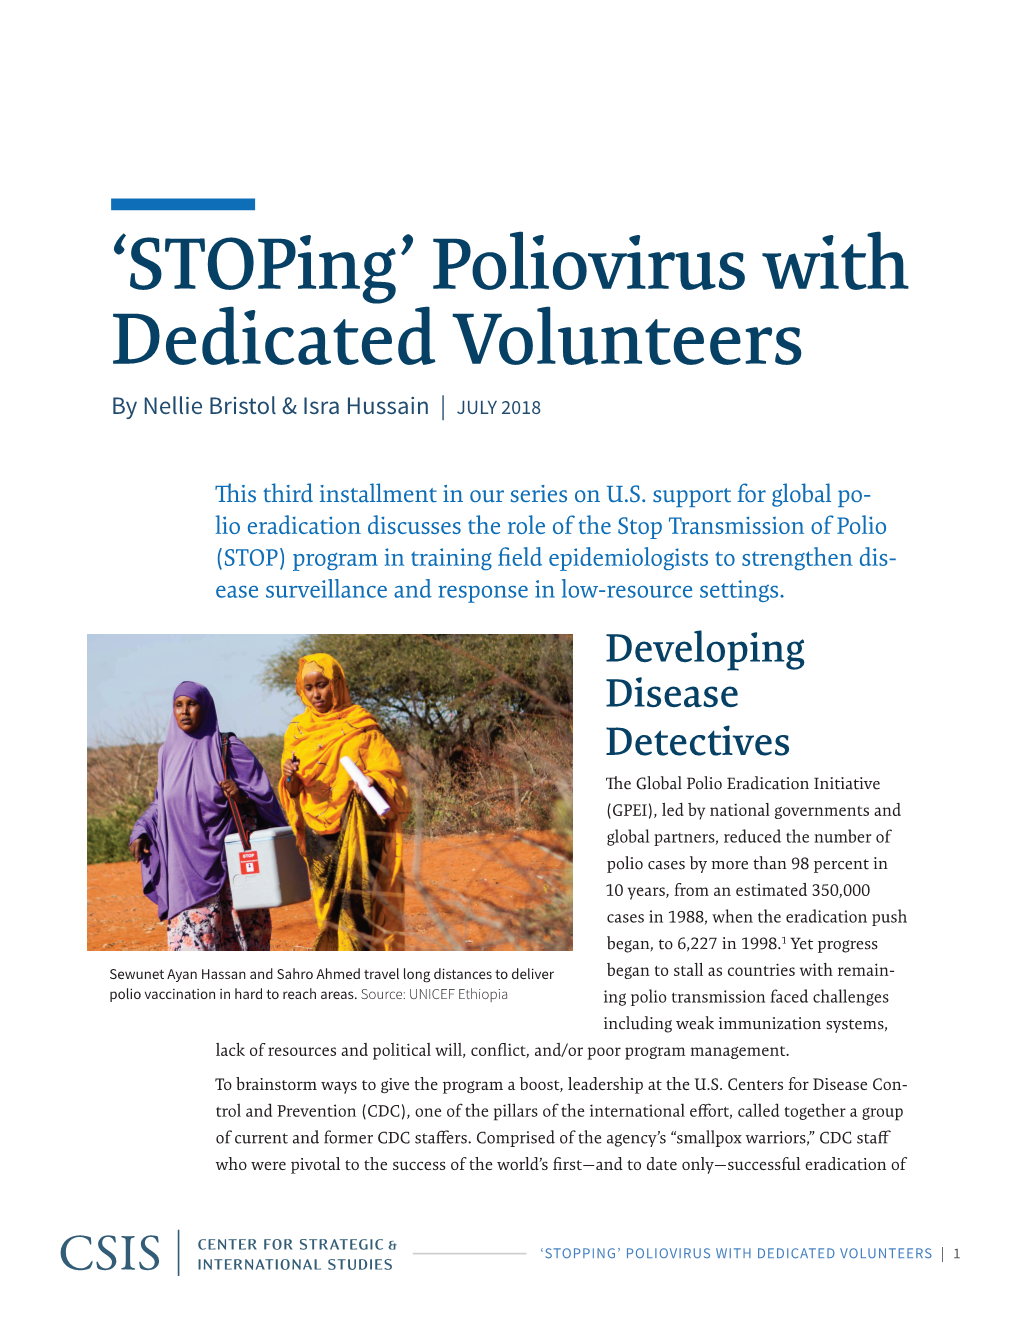 'Stoping' Poliovirus with Dedicated Volunteers